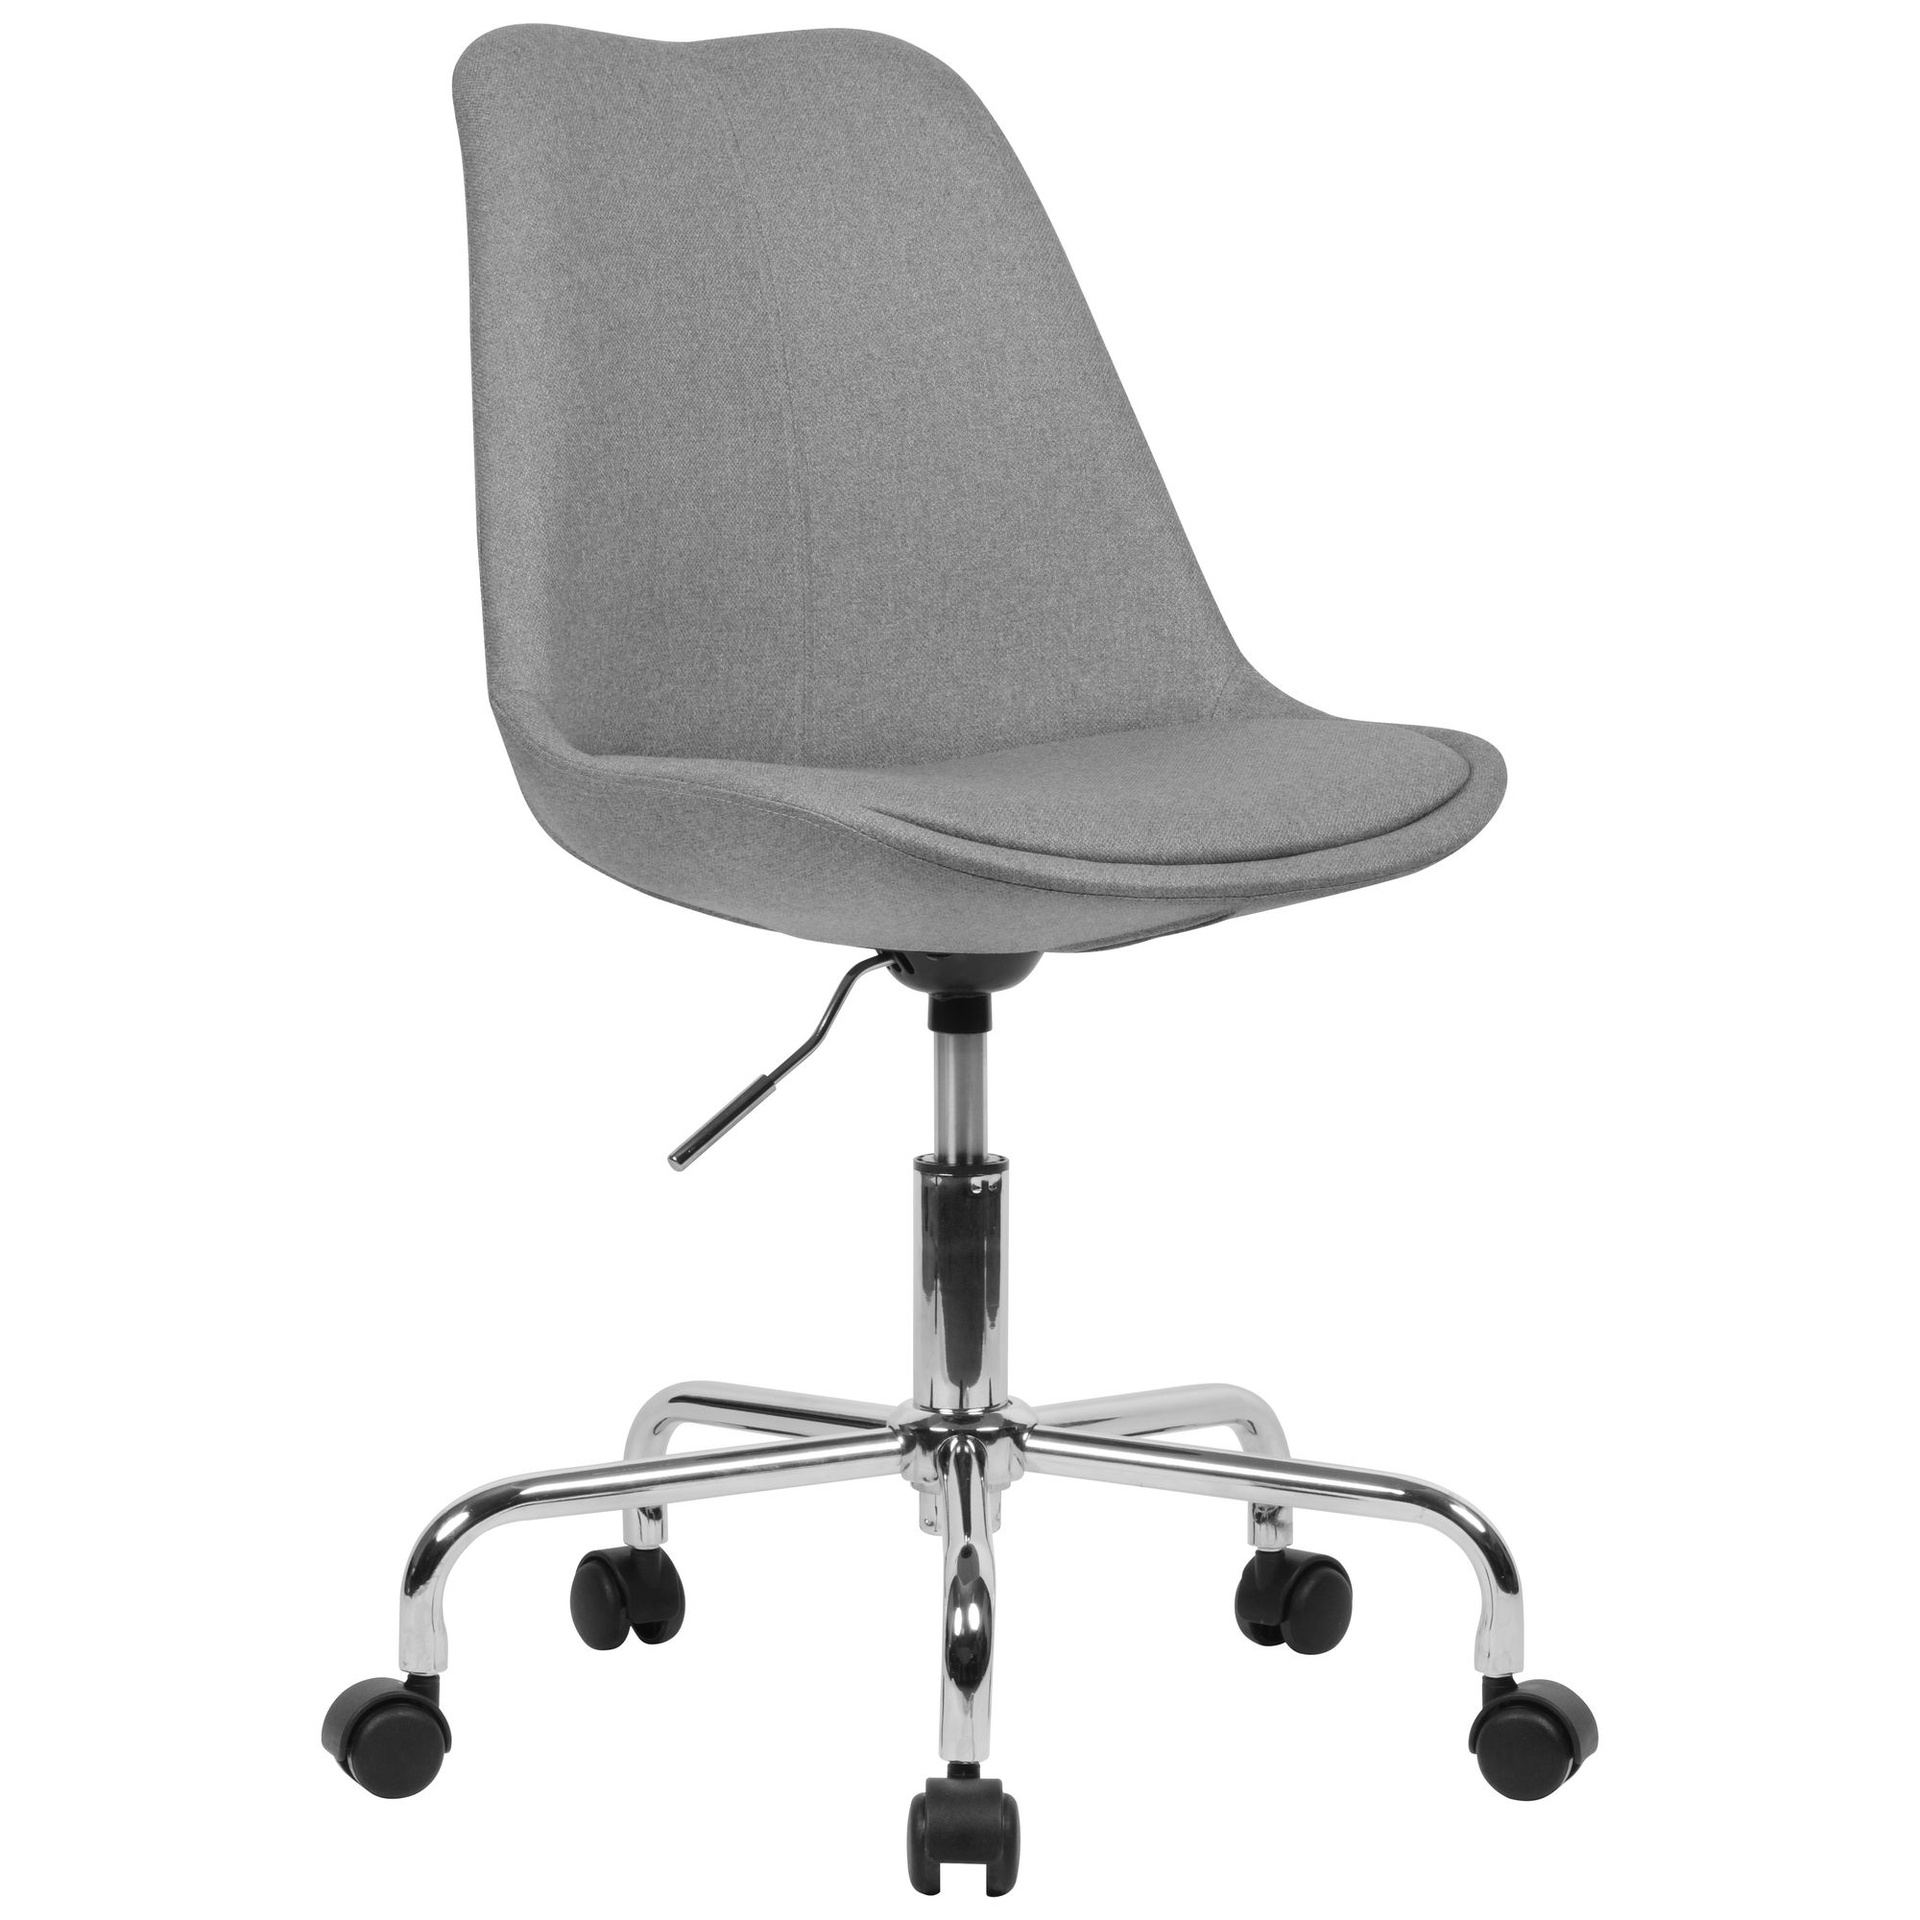 [A09497] Chaise de bureau en tissu gris clair